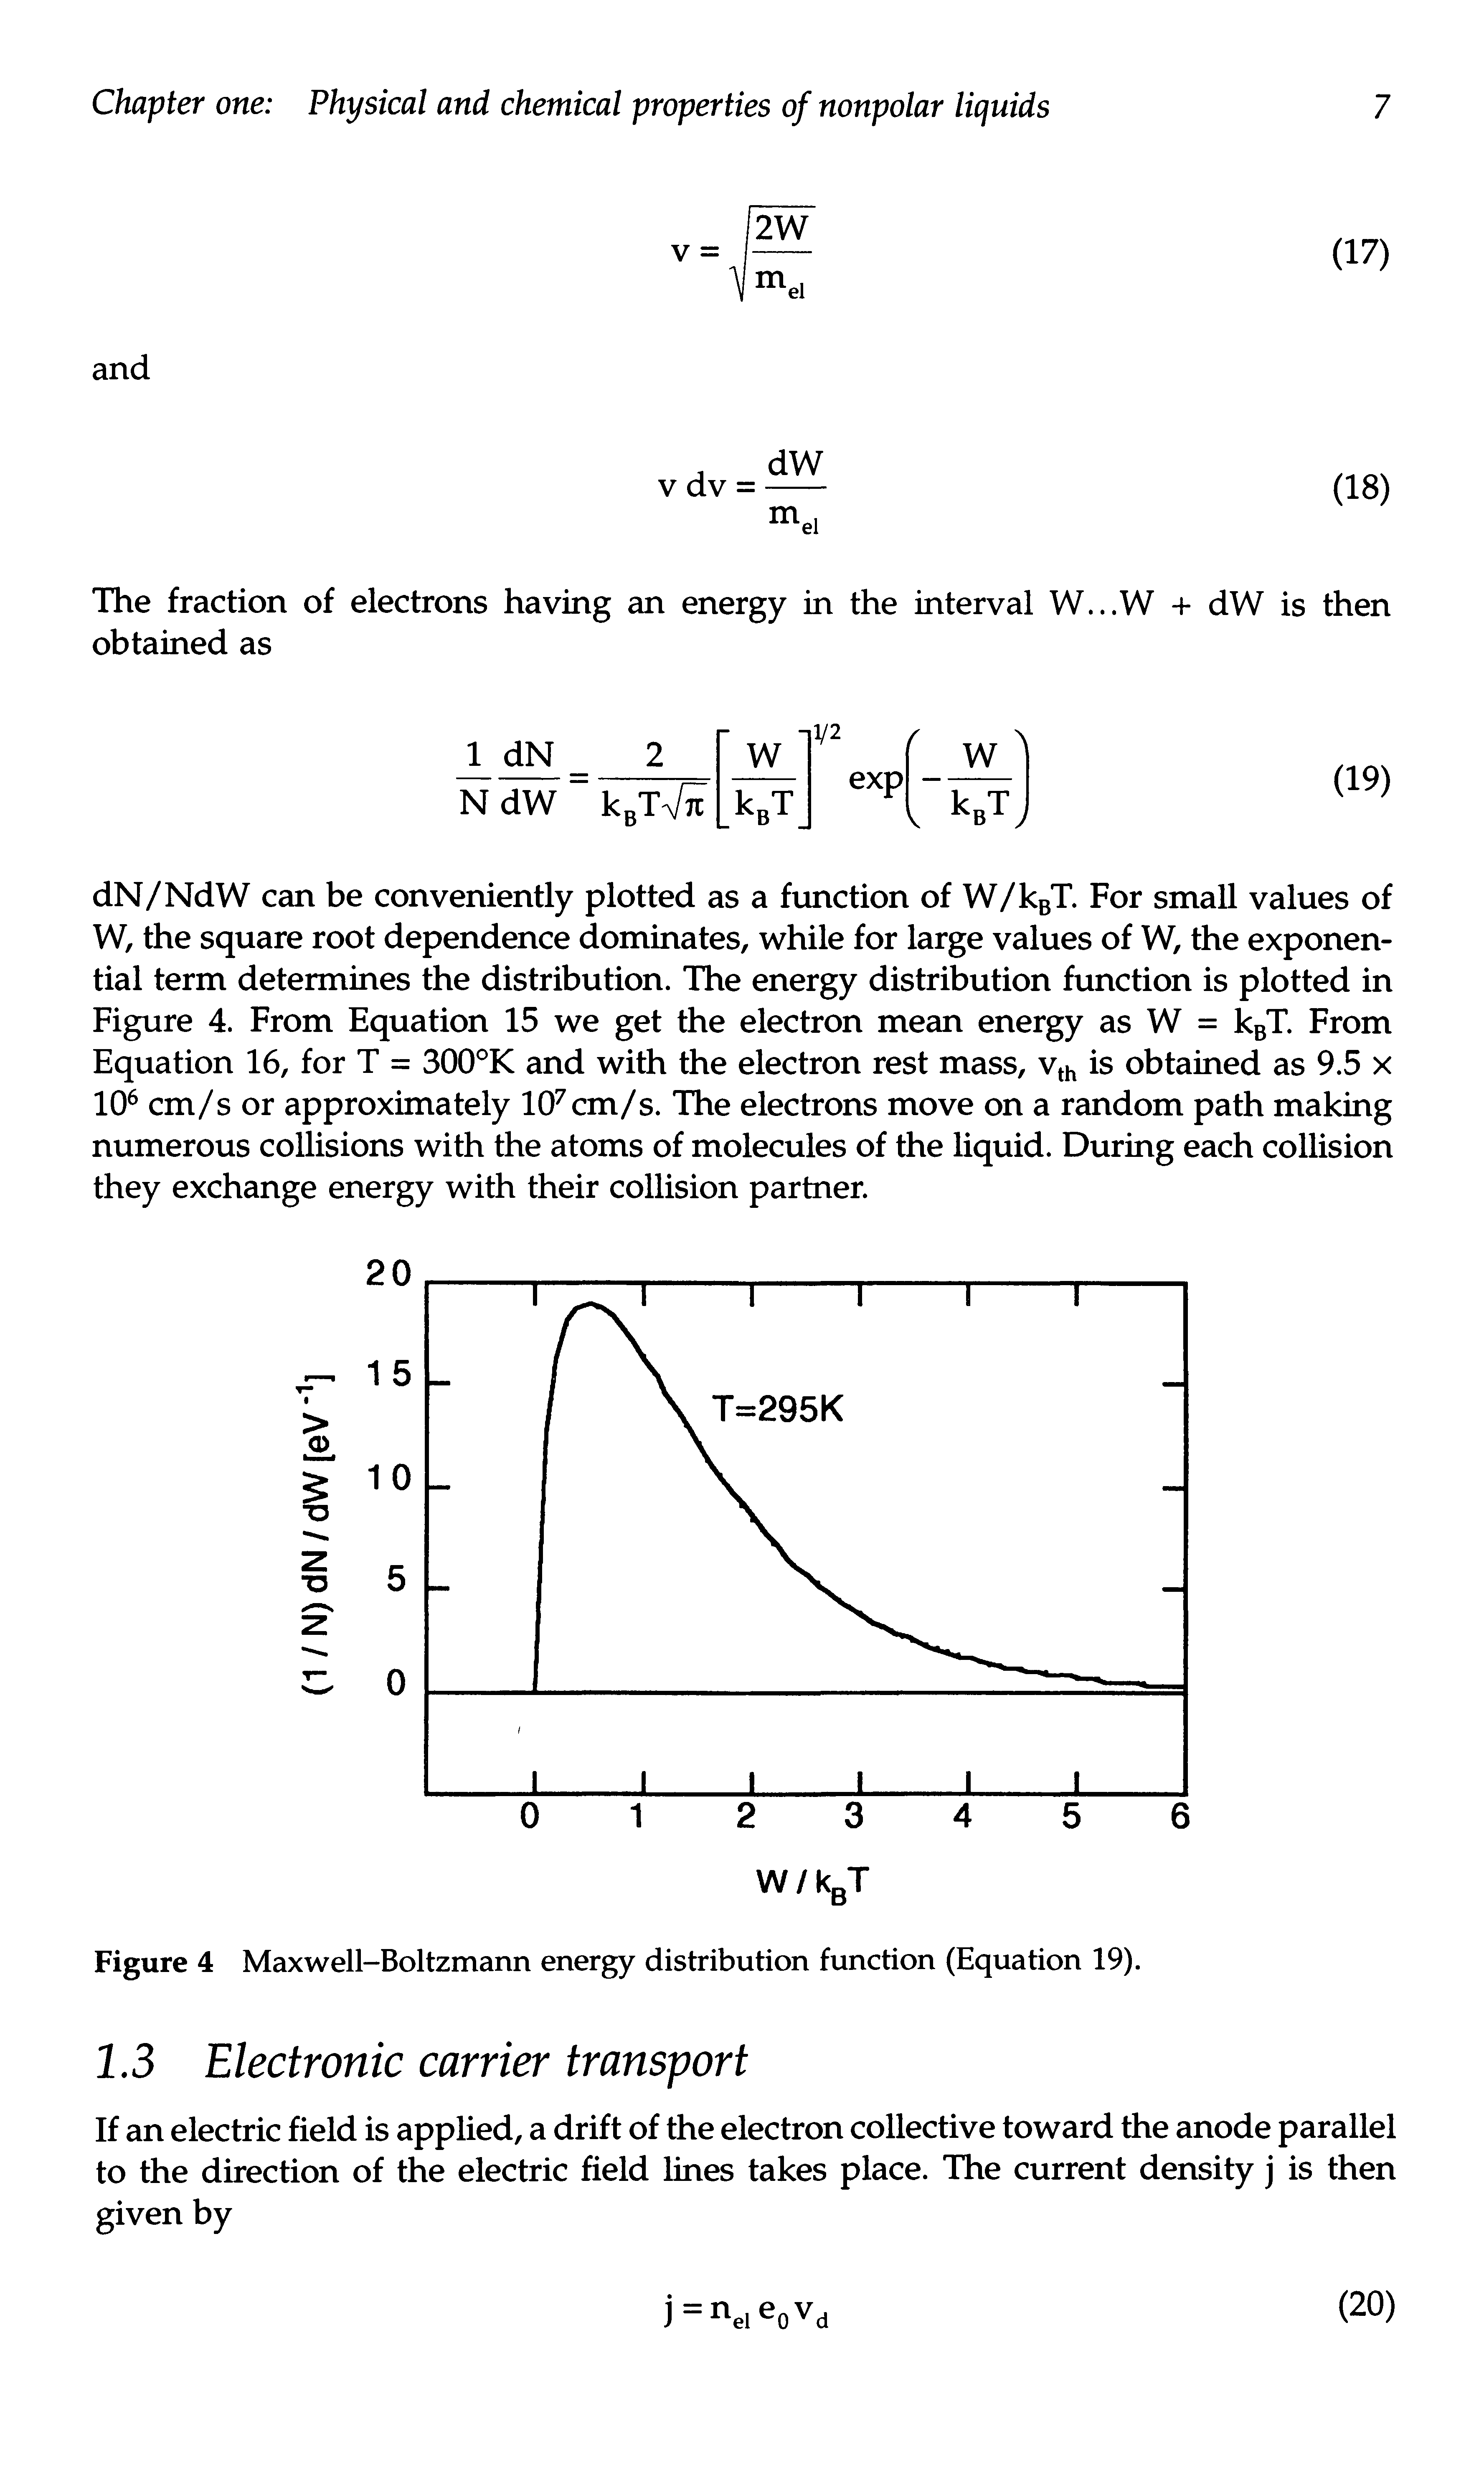 Figure 4 Maxwell-Boltzmann energy distribution function (Equation 19).